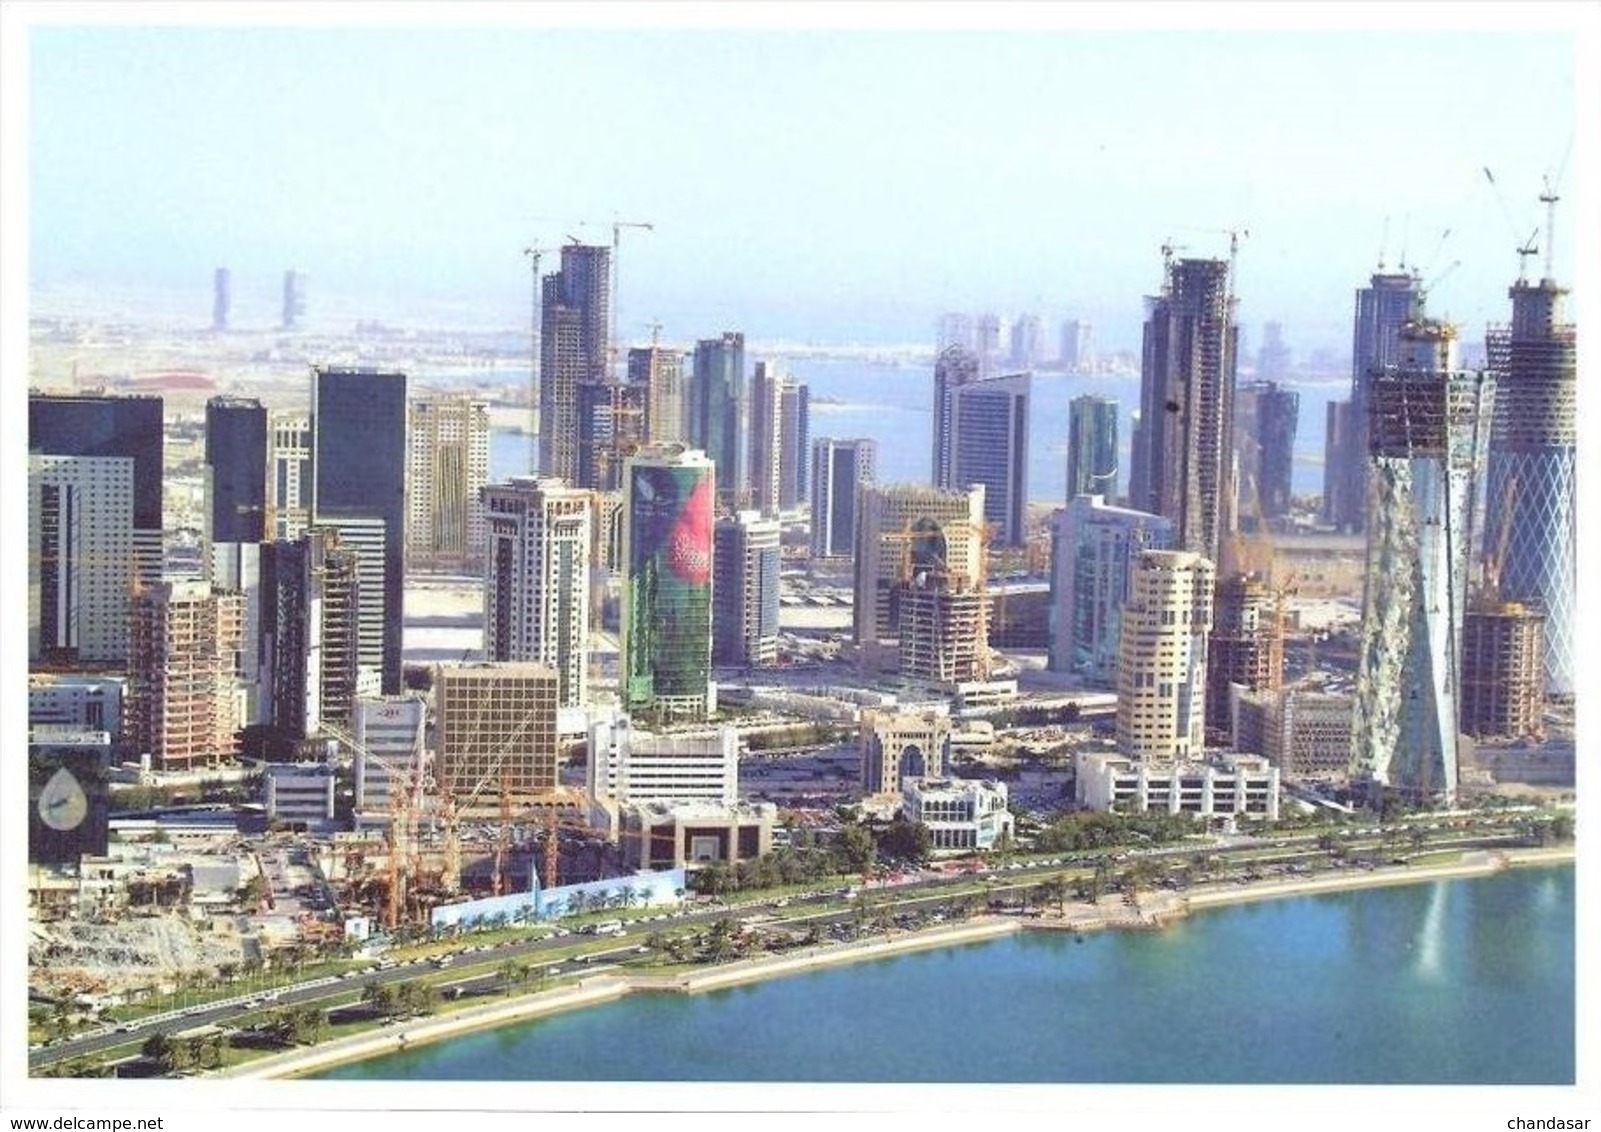 Qatar Scenes, Modern Doha, Buildings & Towers At Corniche - Qatar